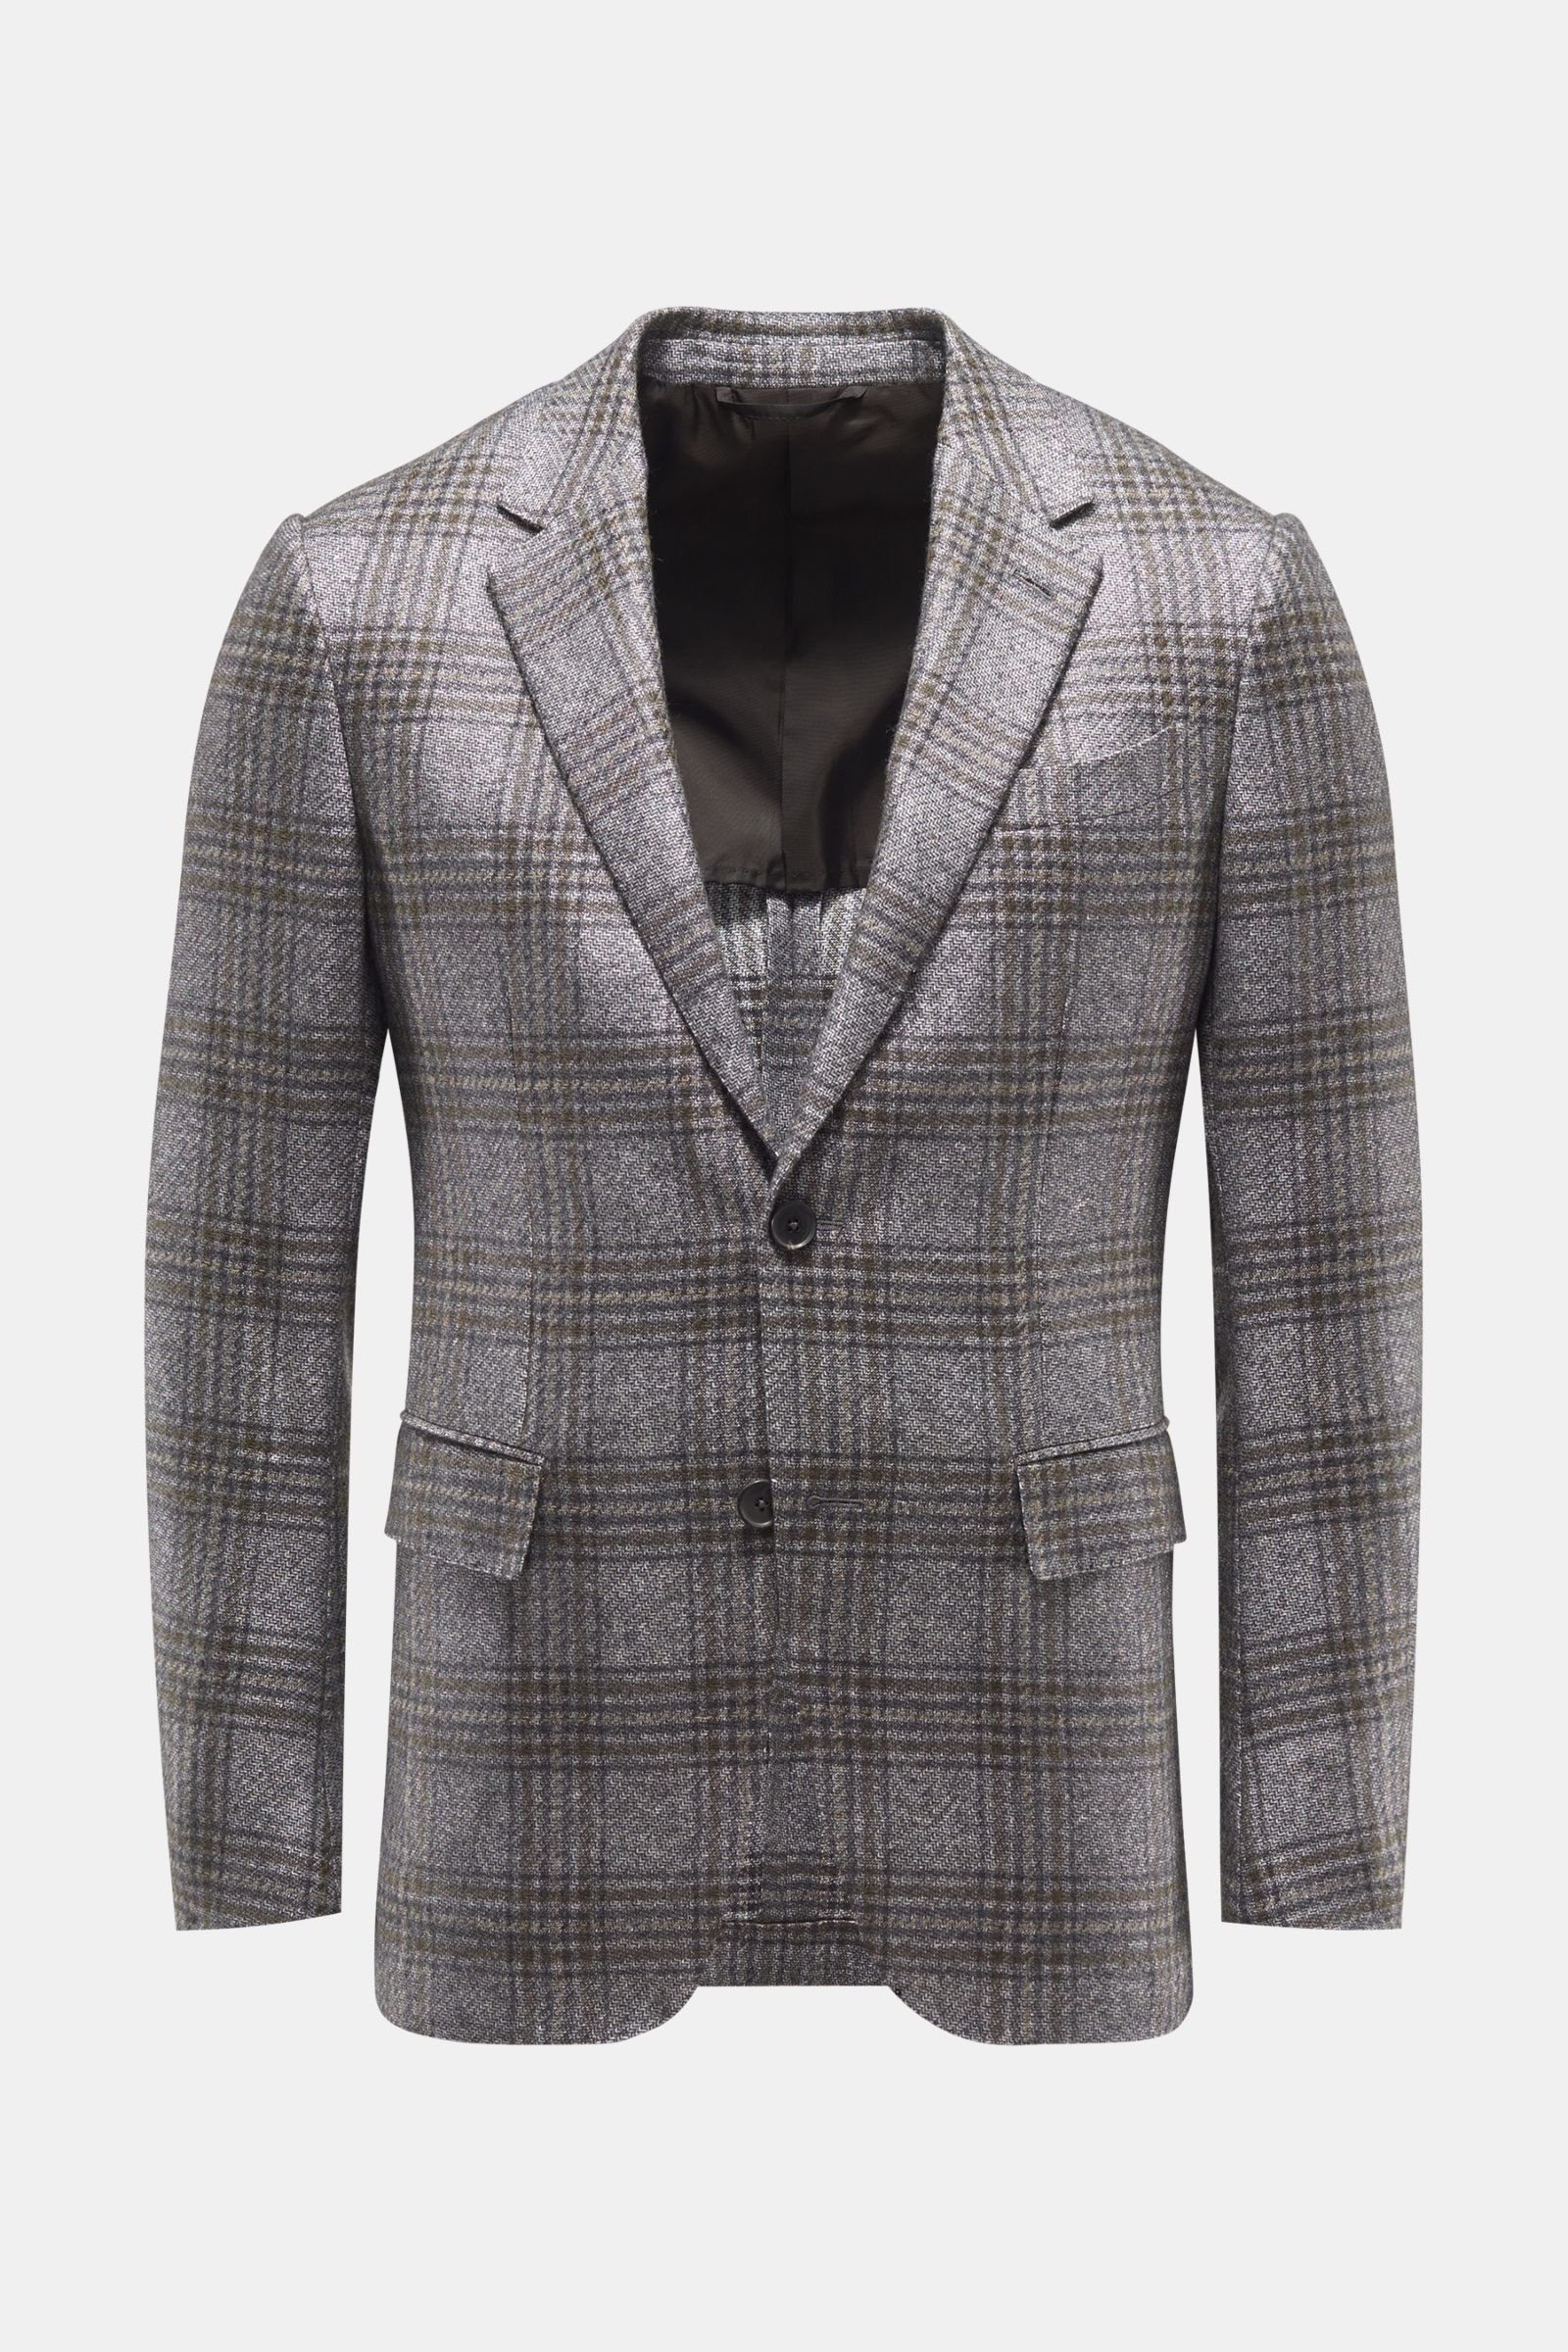 Smart-casual jacket dark grey/olive checked